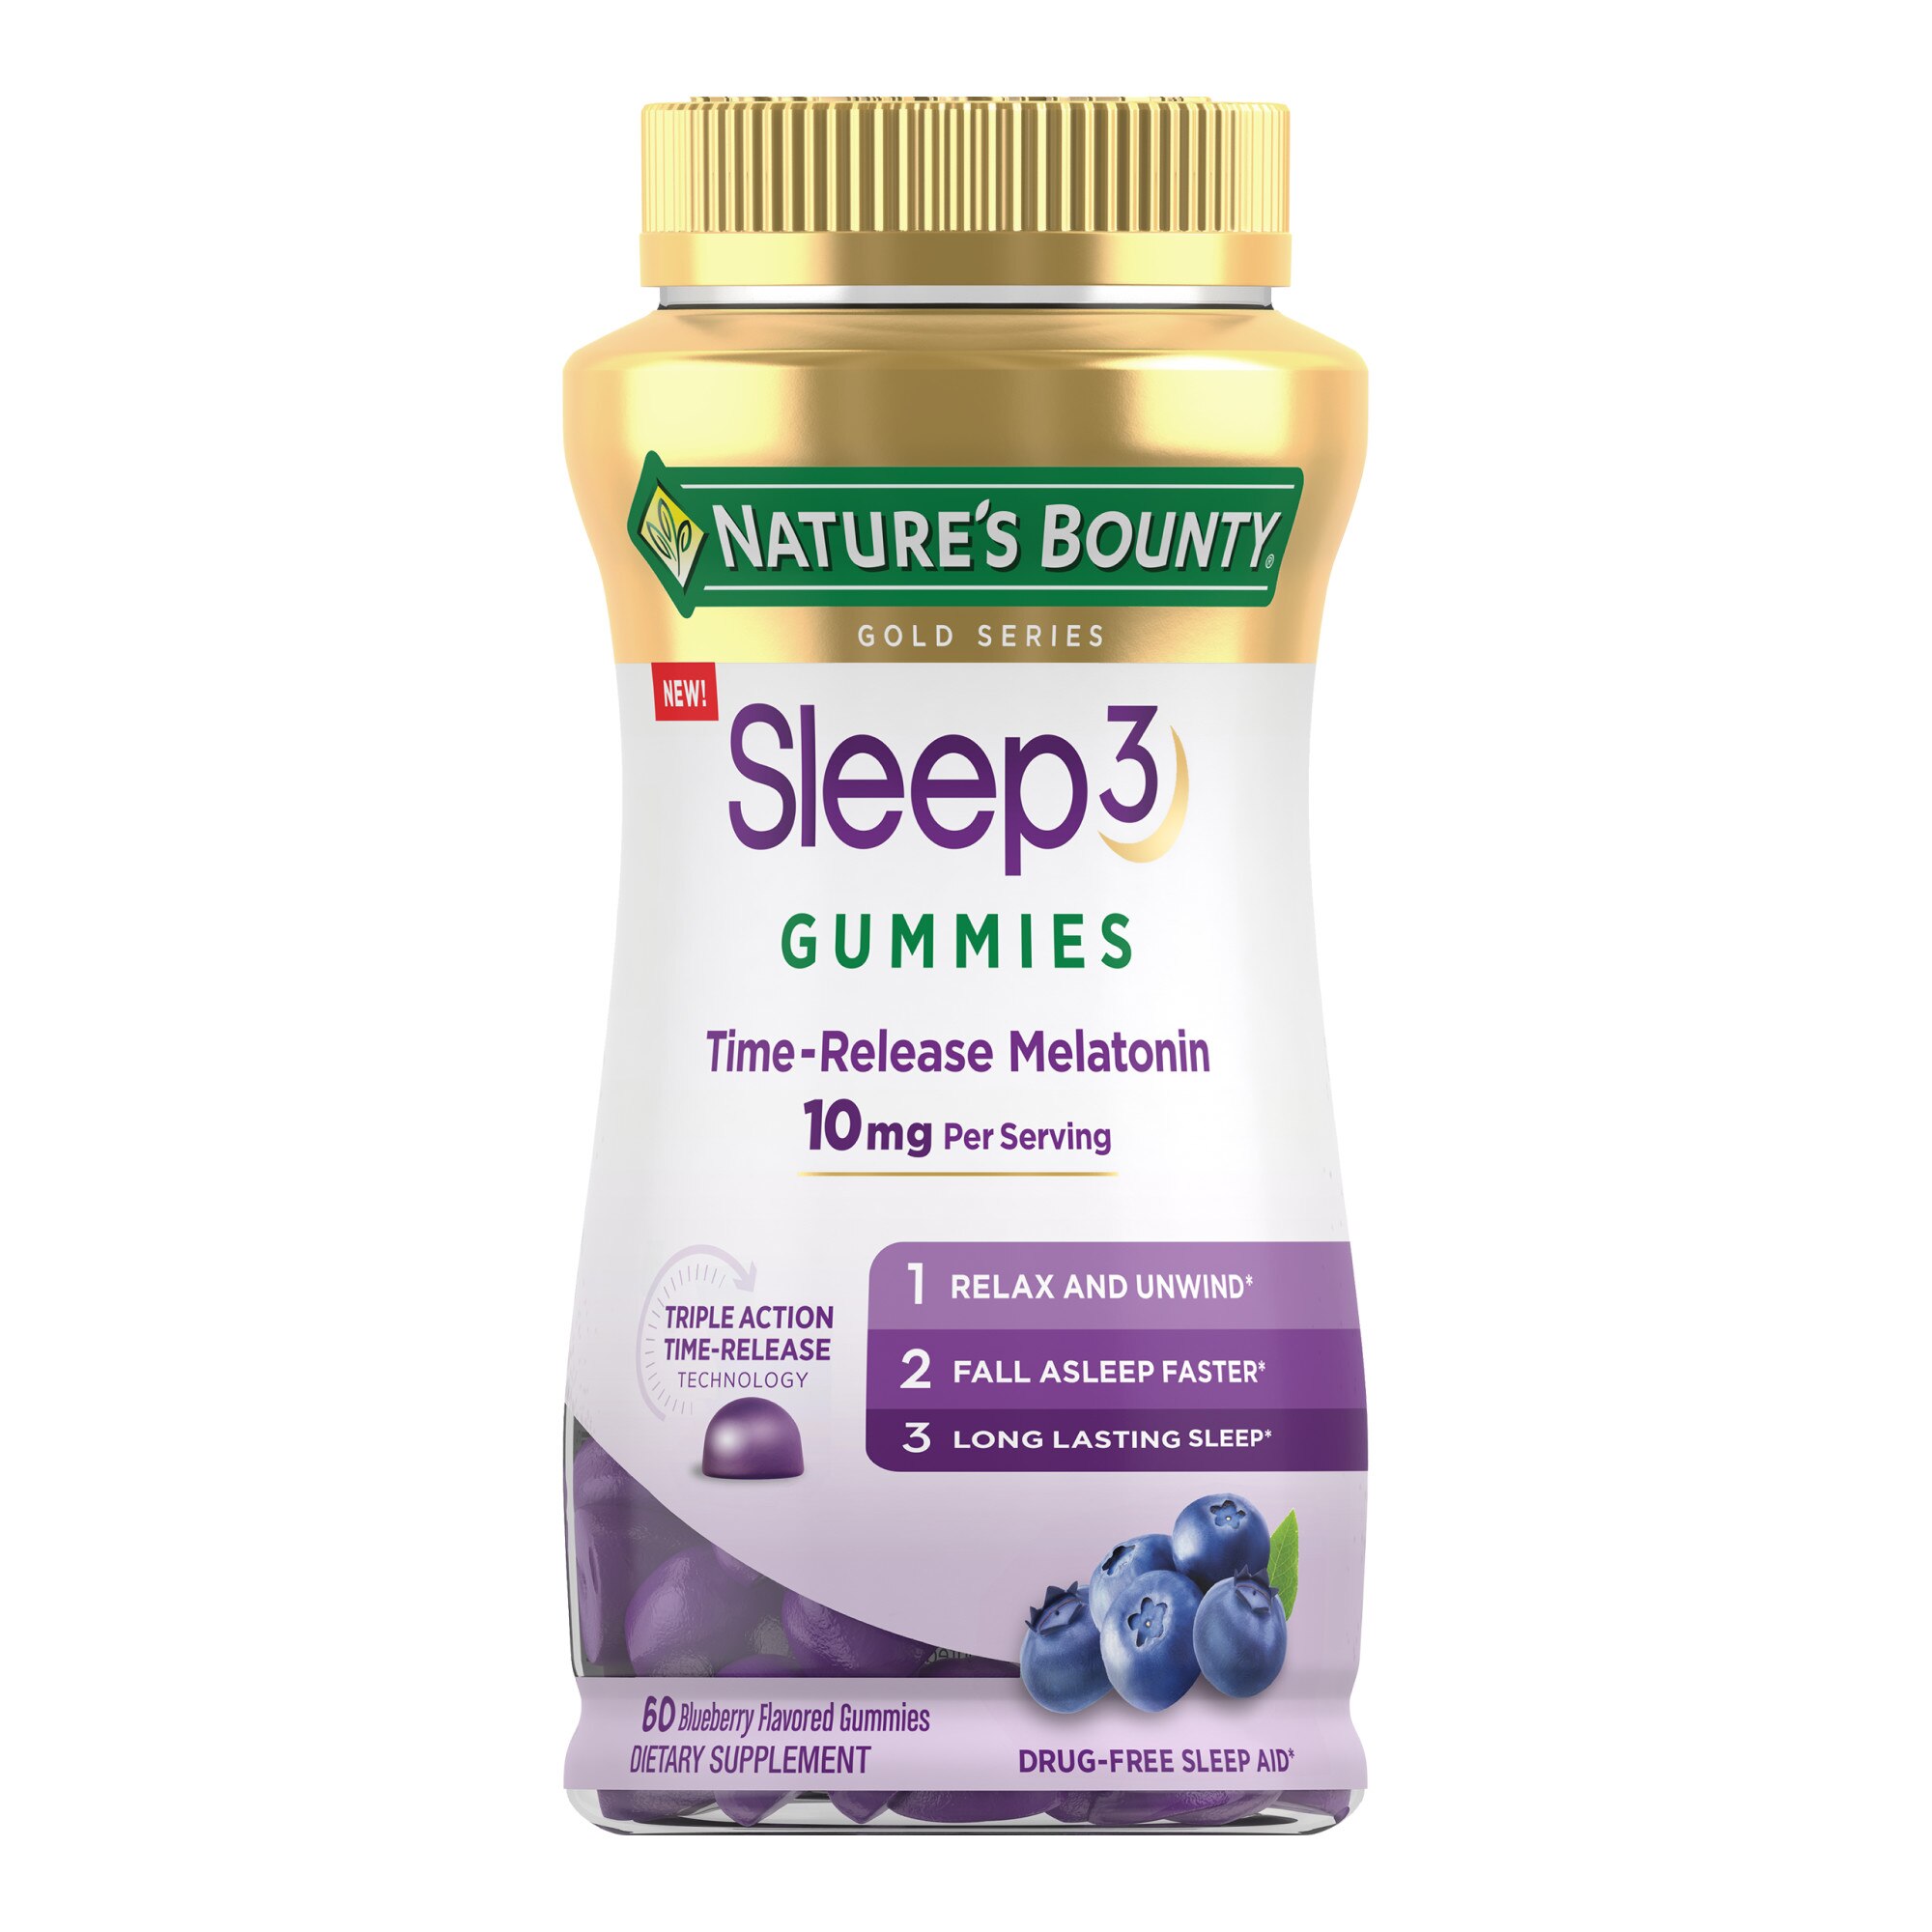 Nature¿s Bounty Sleep3 Gummies, 10mg Melatonin, Drug-Free Sleep Aid, 60 CT